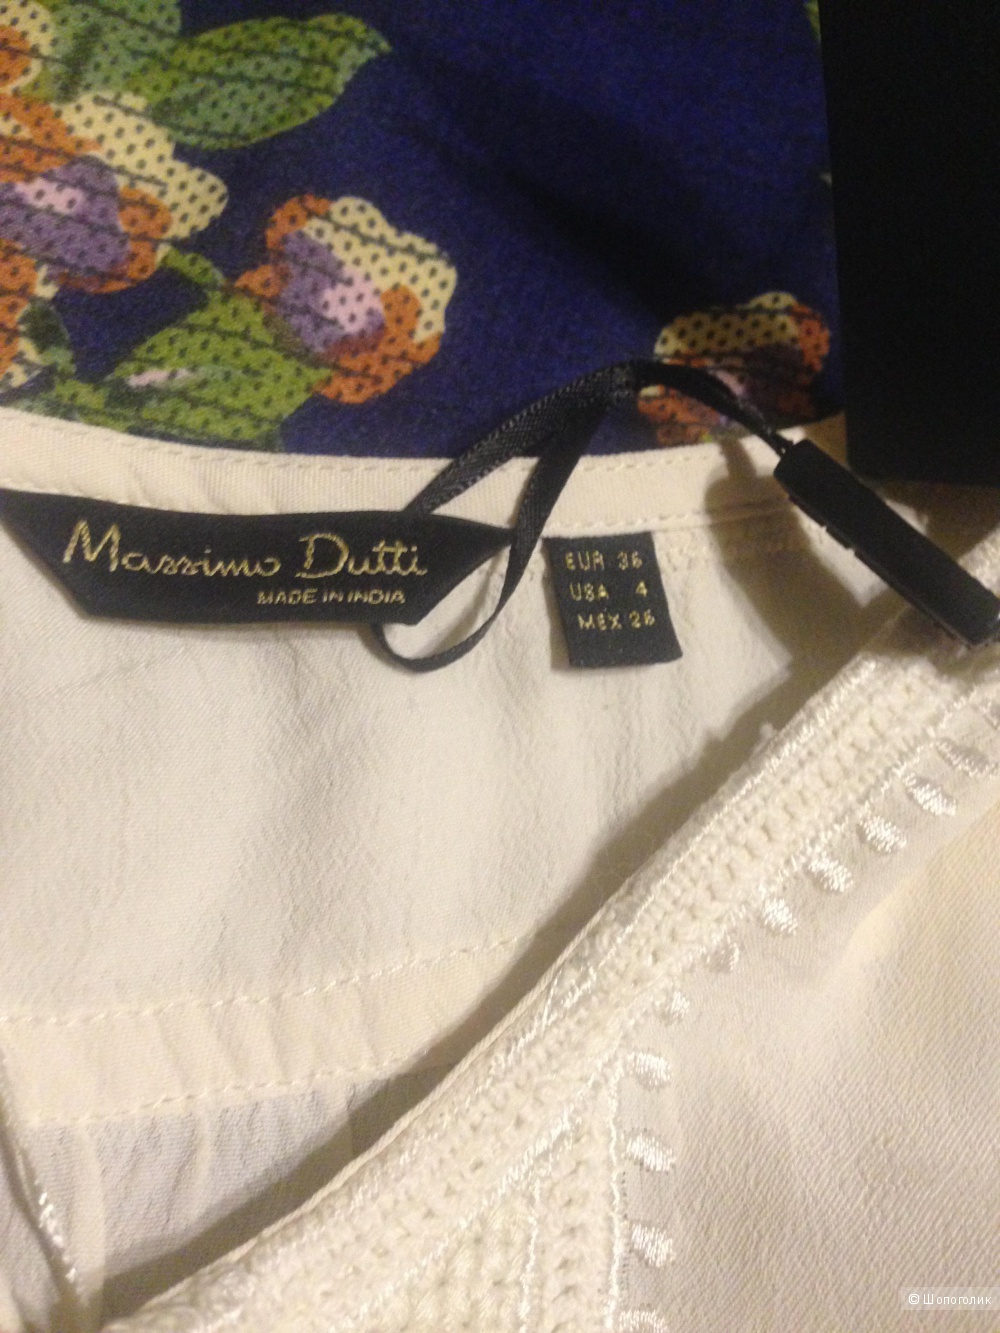 Блуза Massimo Dutti, 46-48 размер.